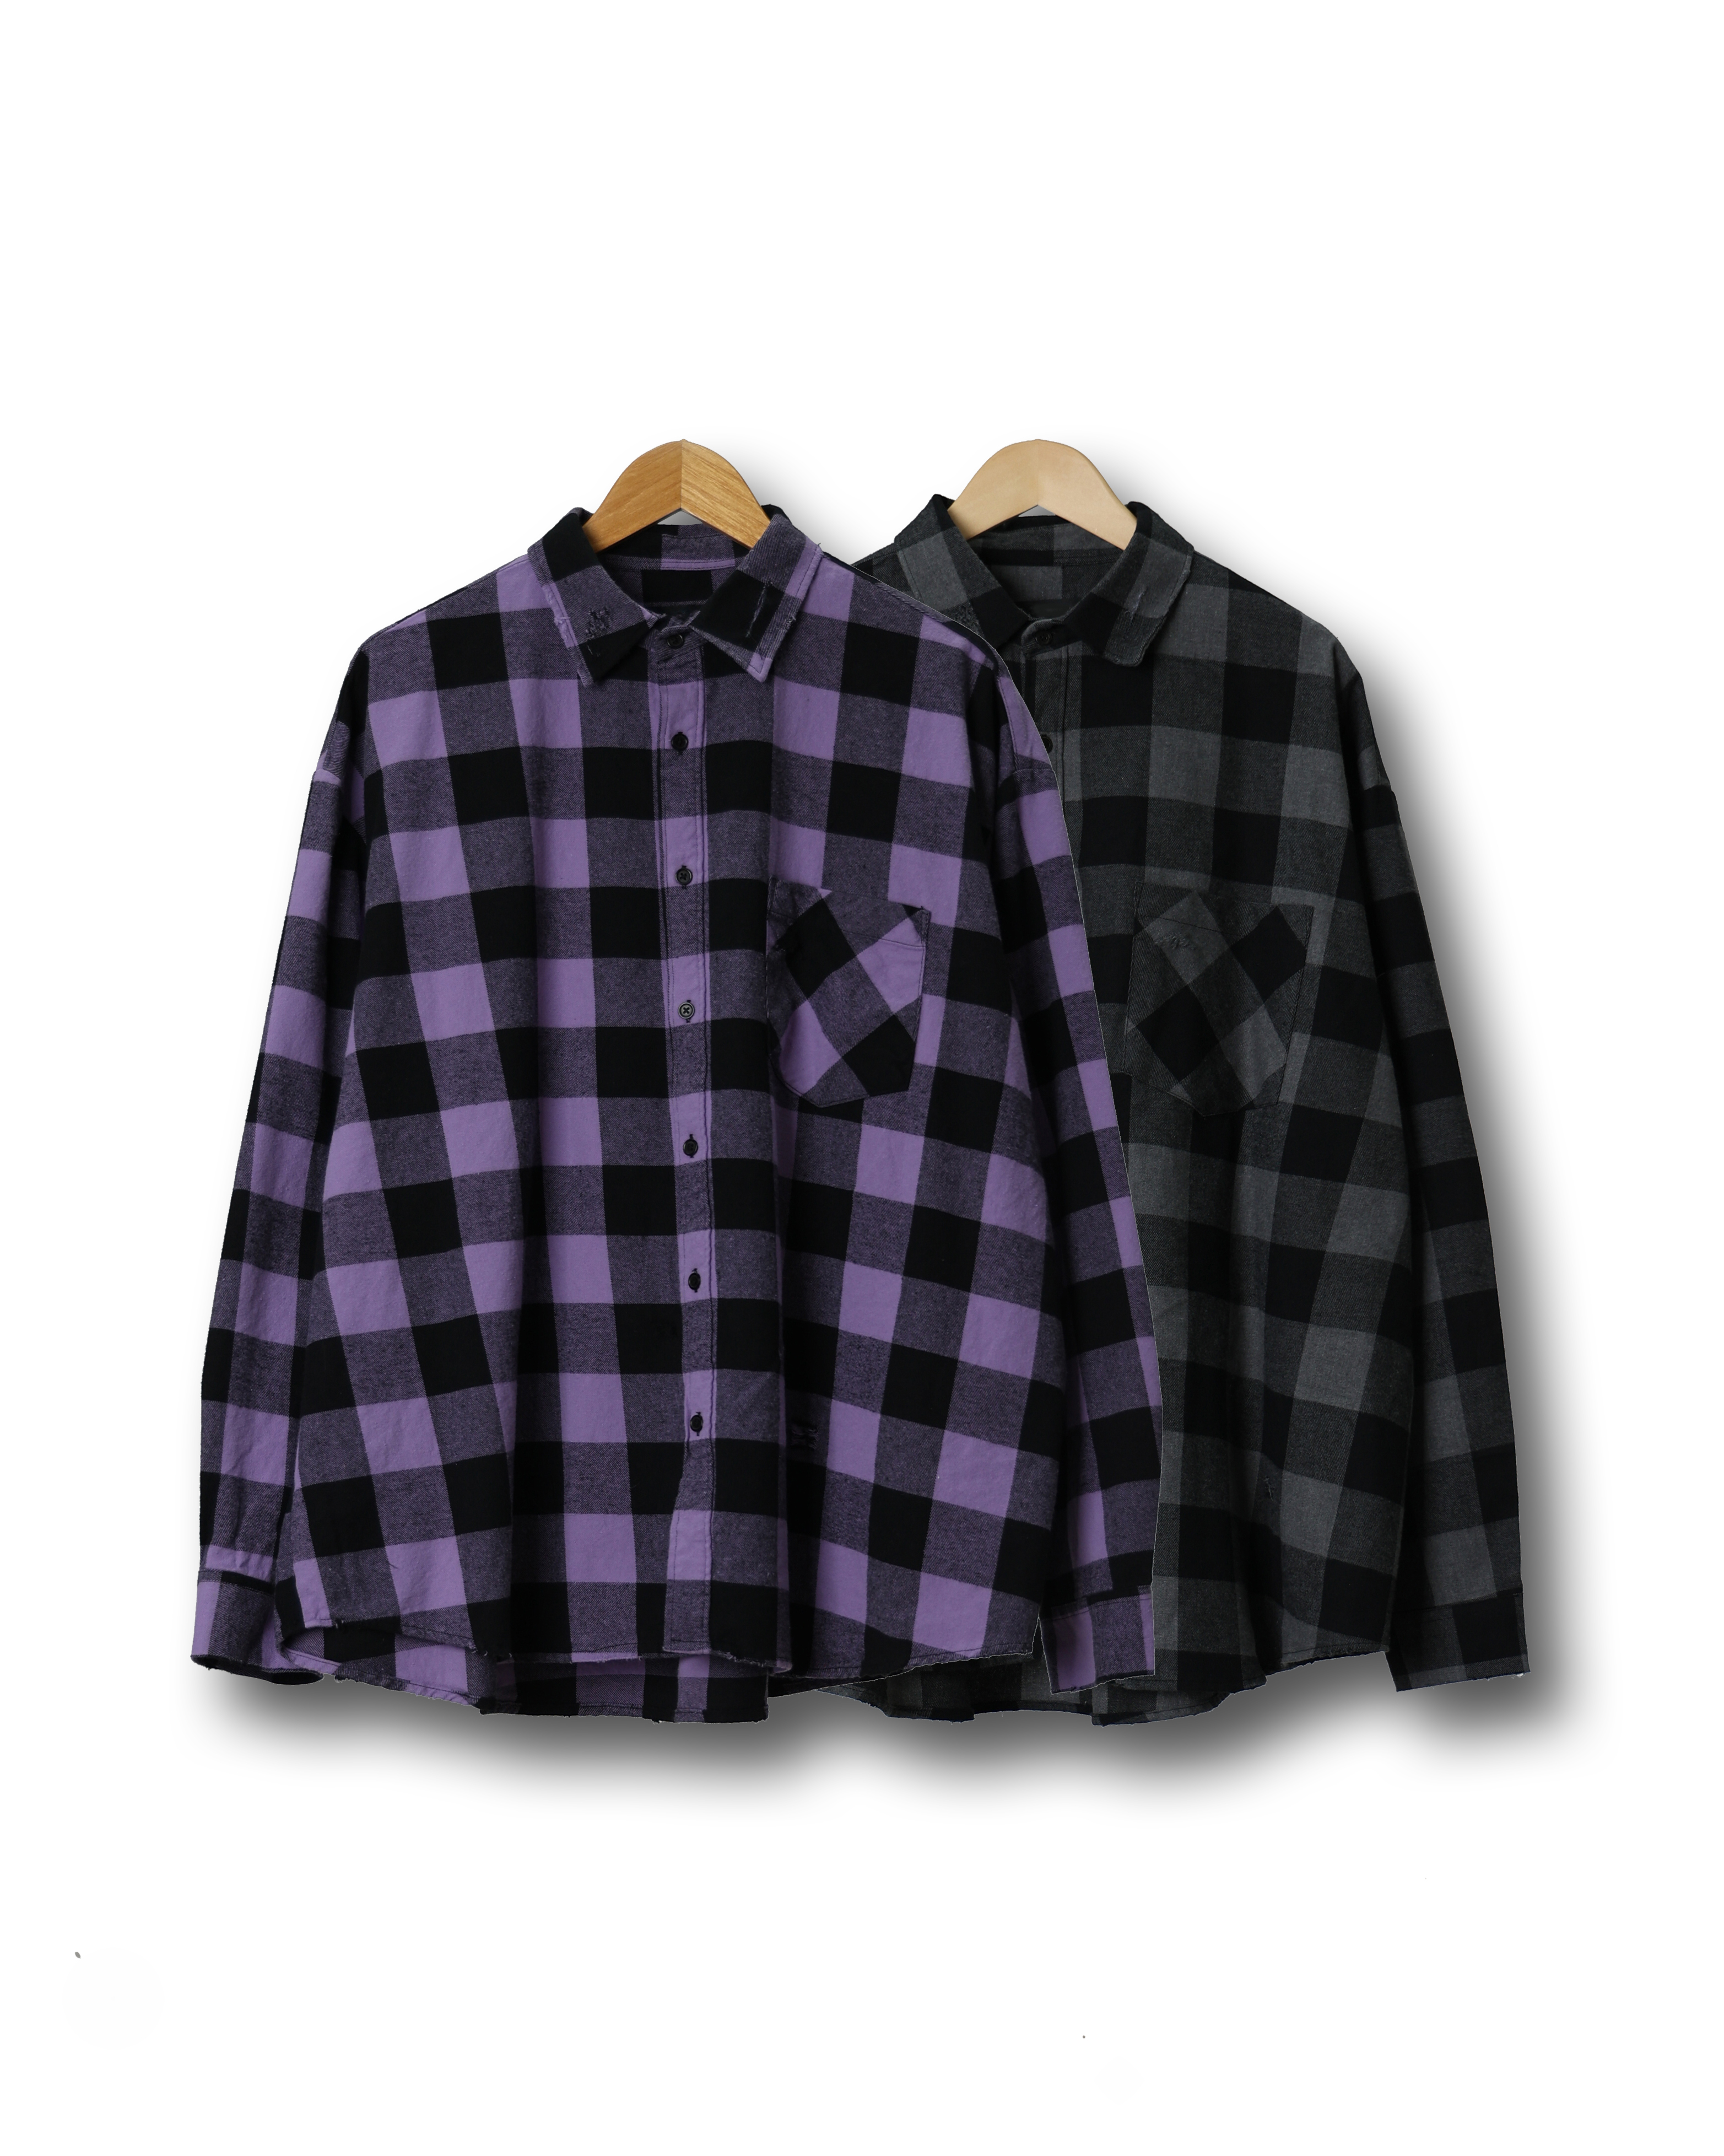 GLAM Vintage Check Over Shirts (Charcoal/Purple) - 6차 리오더 (4/22 배송예정)